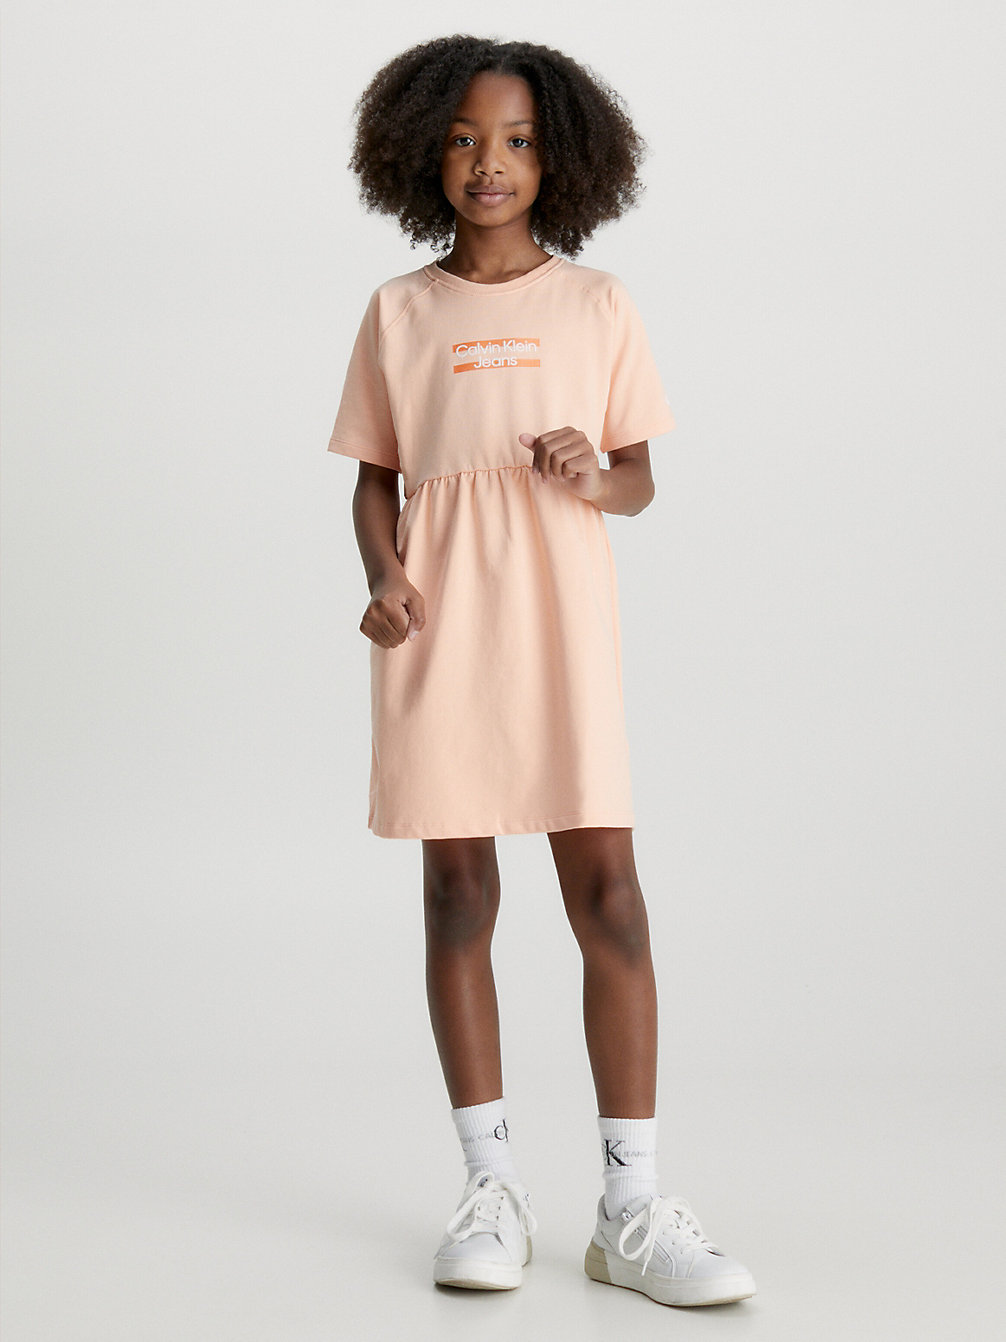 FRESH CANTALOUPE Logo T-Shirt Dress undefined girls Calvin Klein